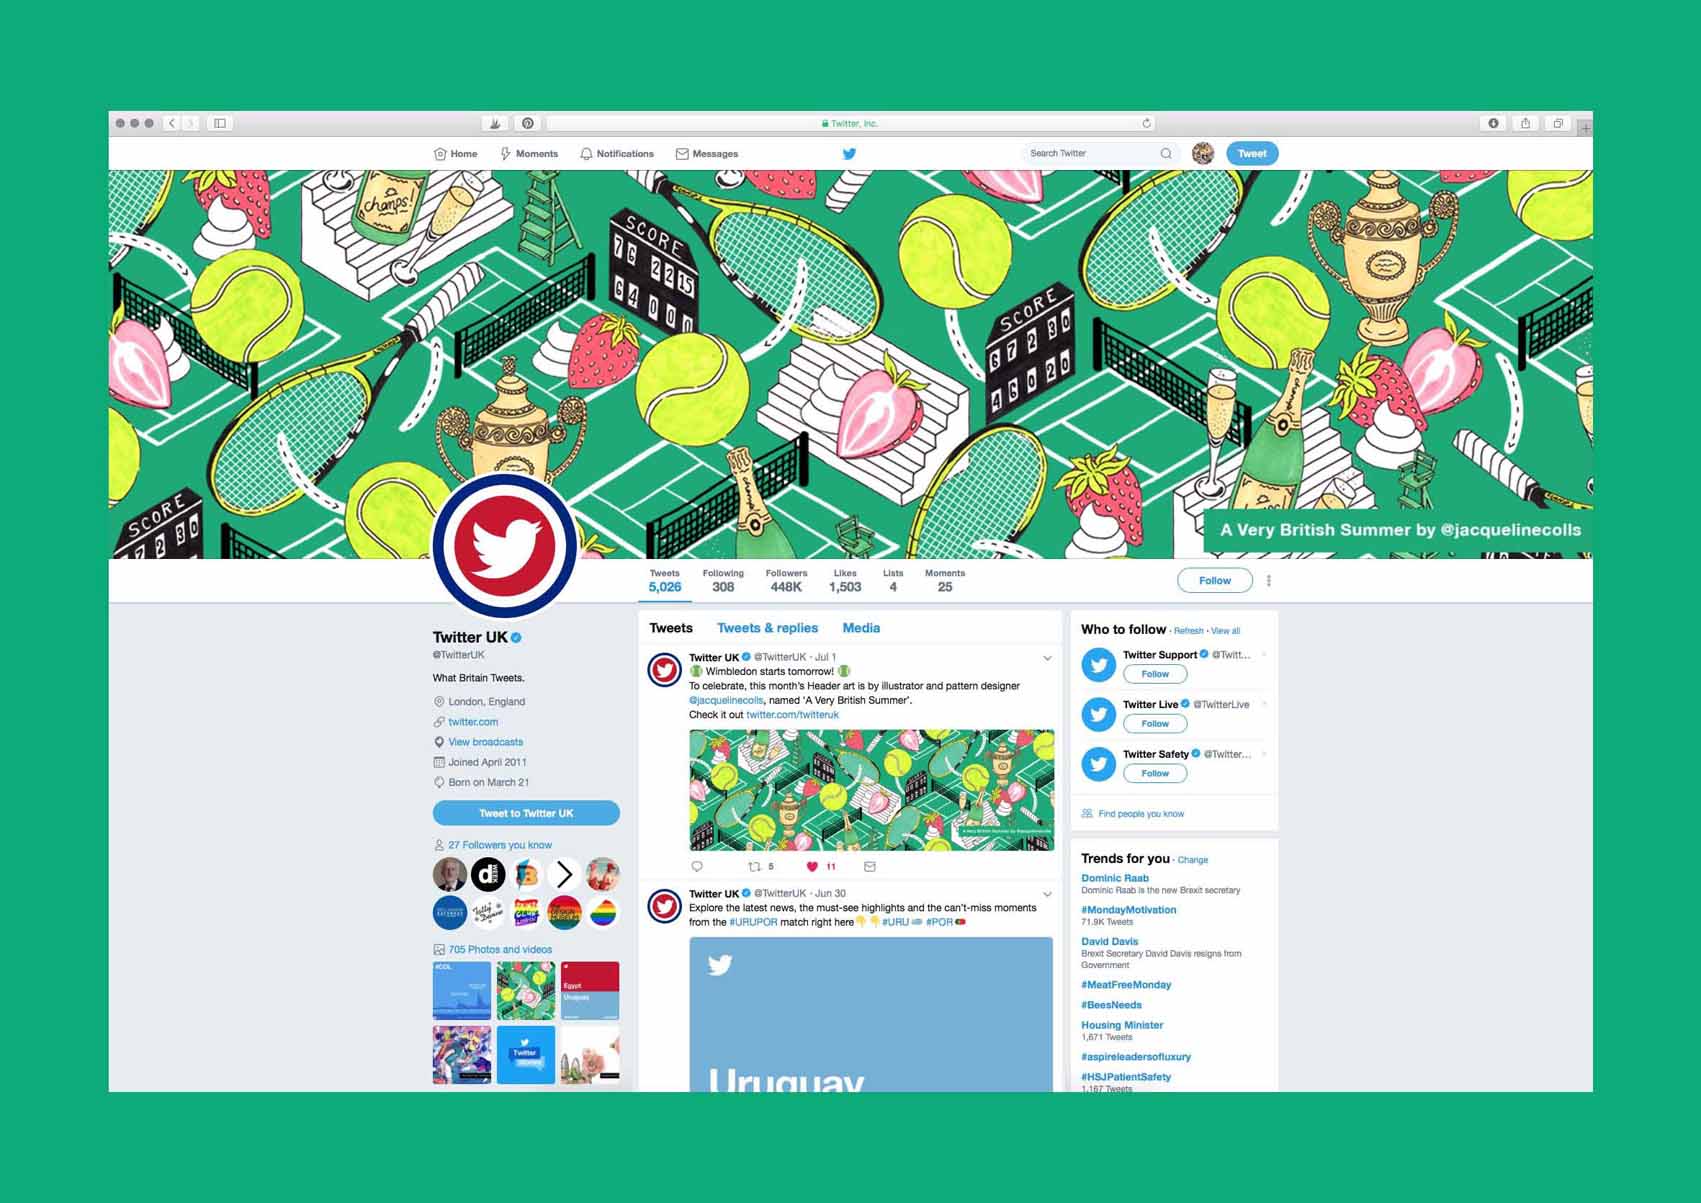 Twitter-Uk-Wimbledon-Tennis-Illustration-Header-sm.jpg